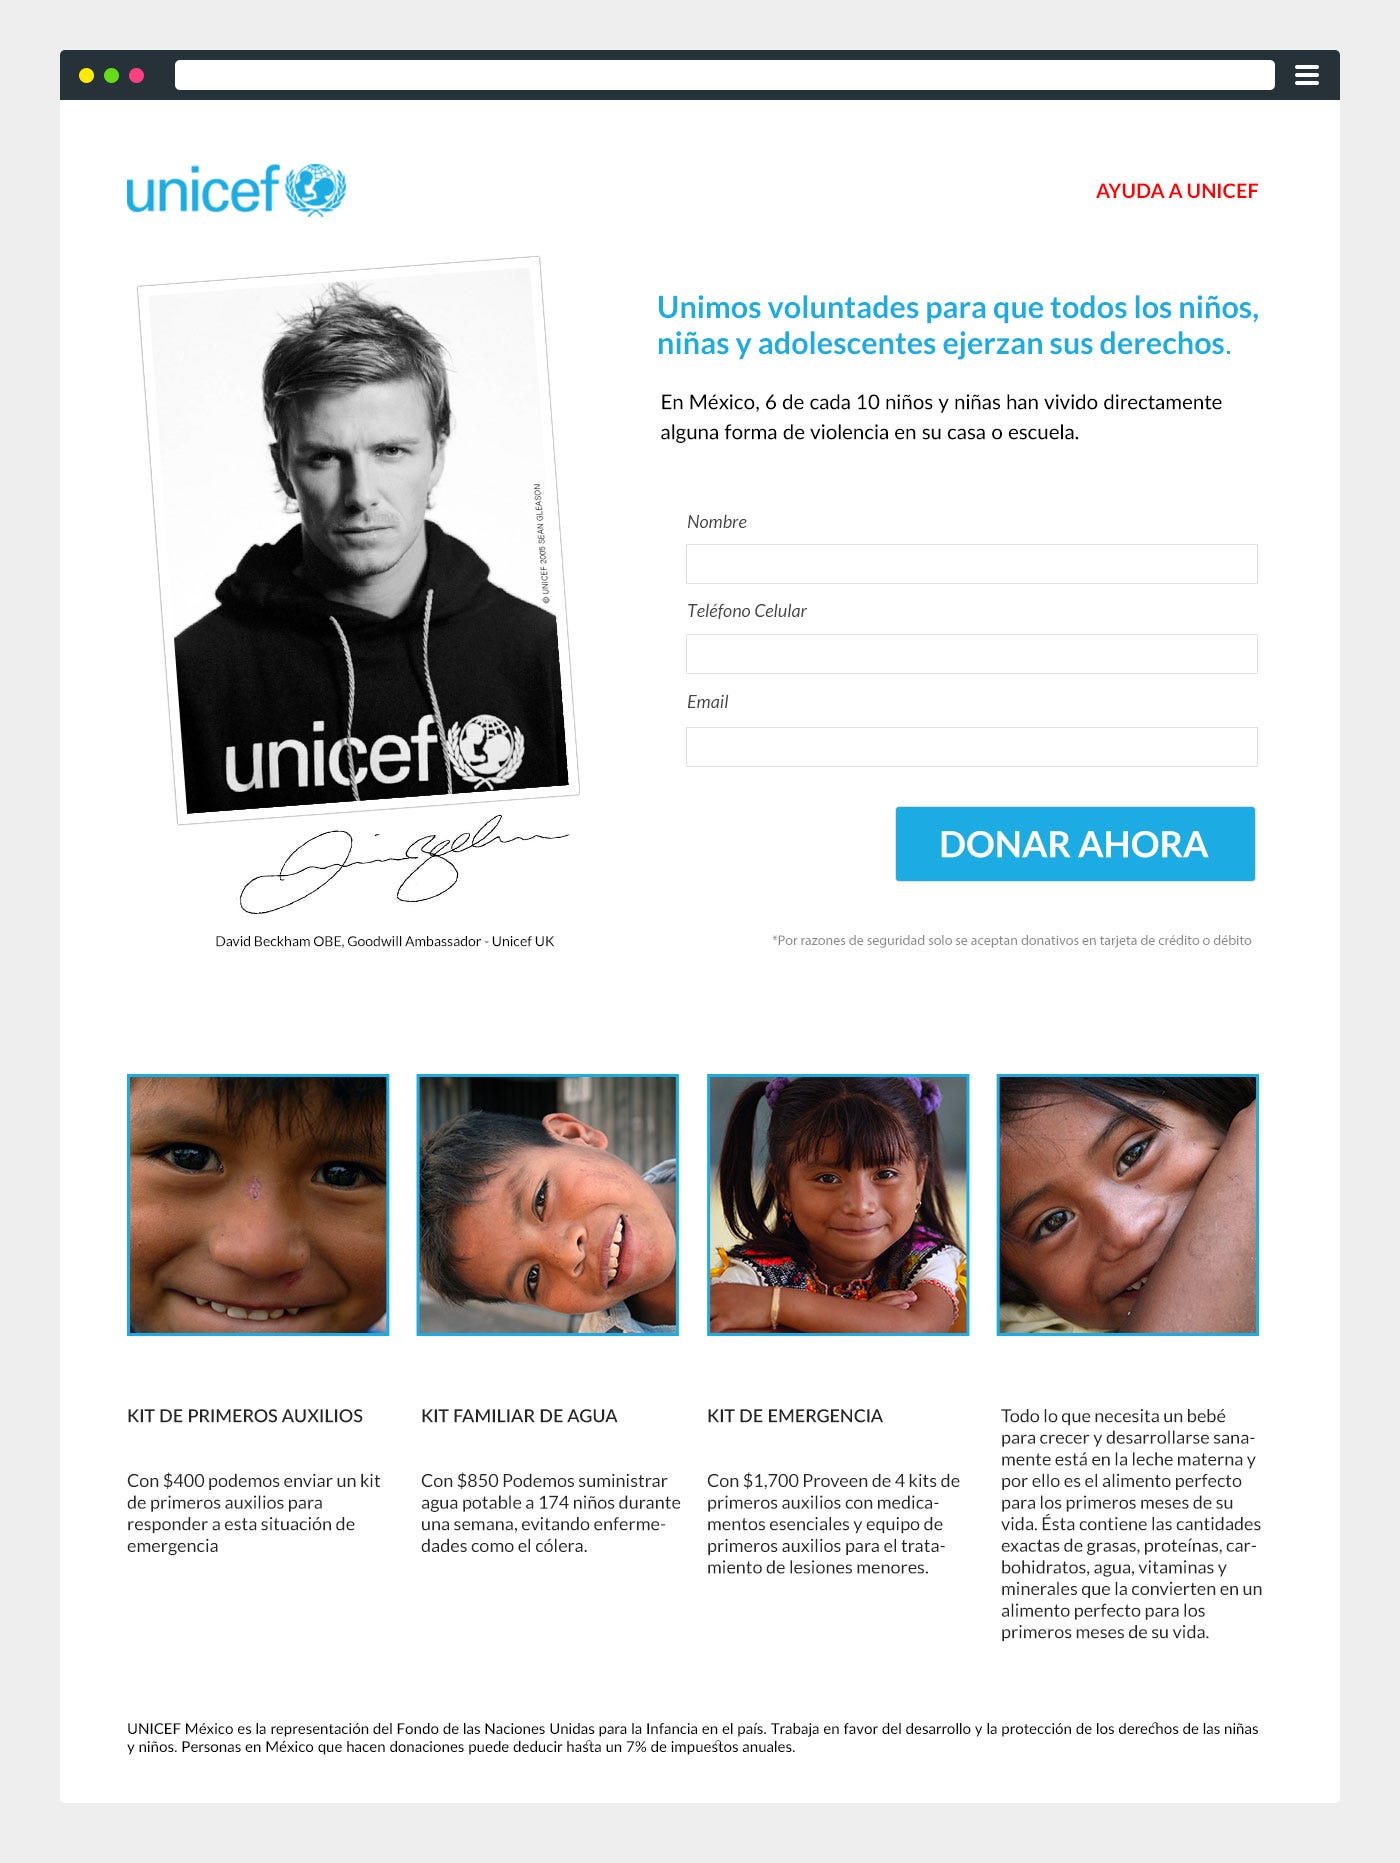 David Beckham OBE, Goodwill Ambassador - Unicef UK